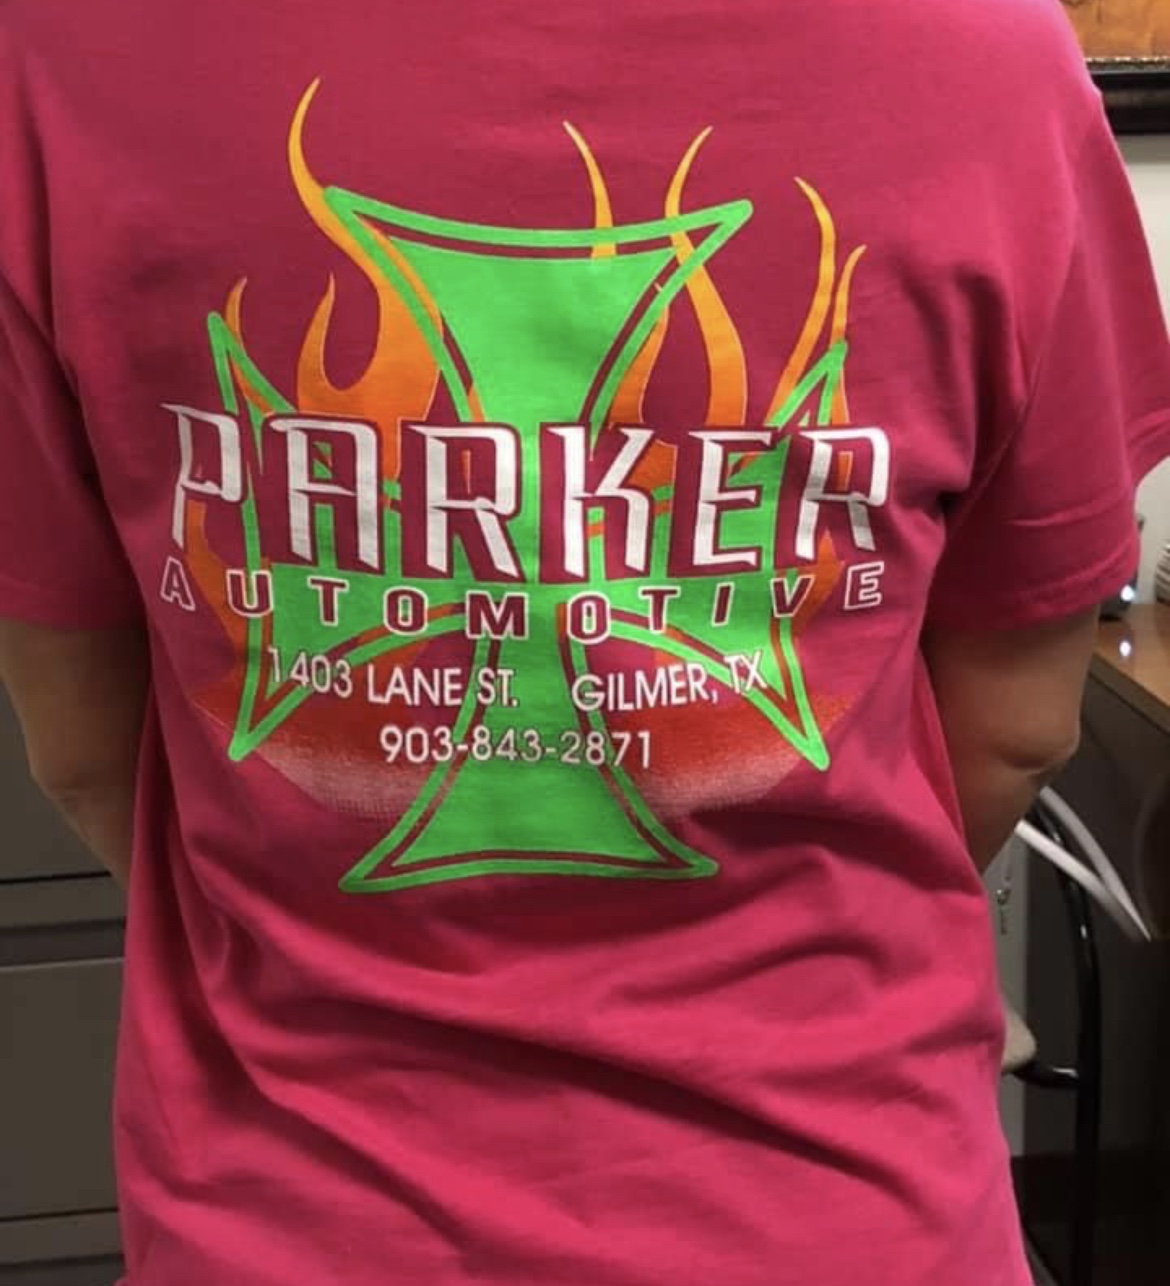 Parker Auto Repair 1403 Lane St, Gilmer Texas 75644